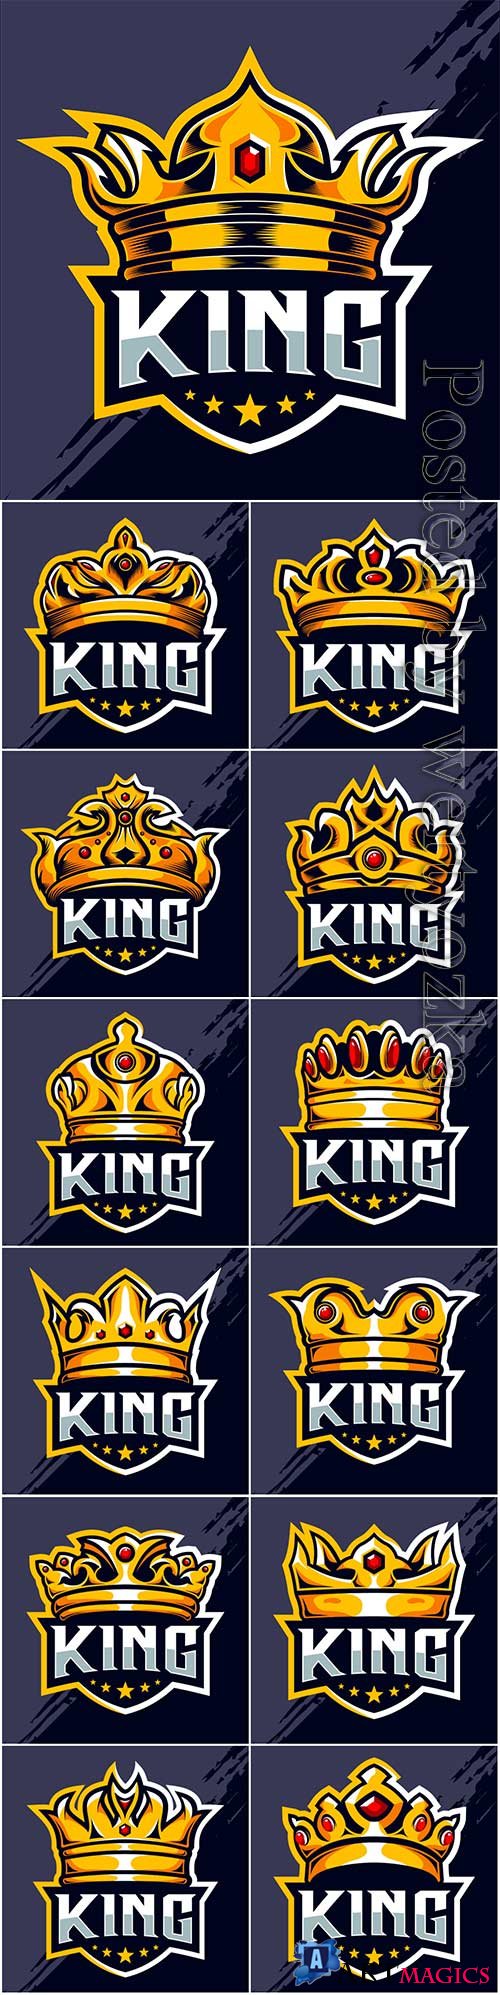 King crown esport logo design premium vector